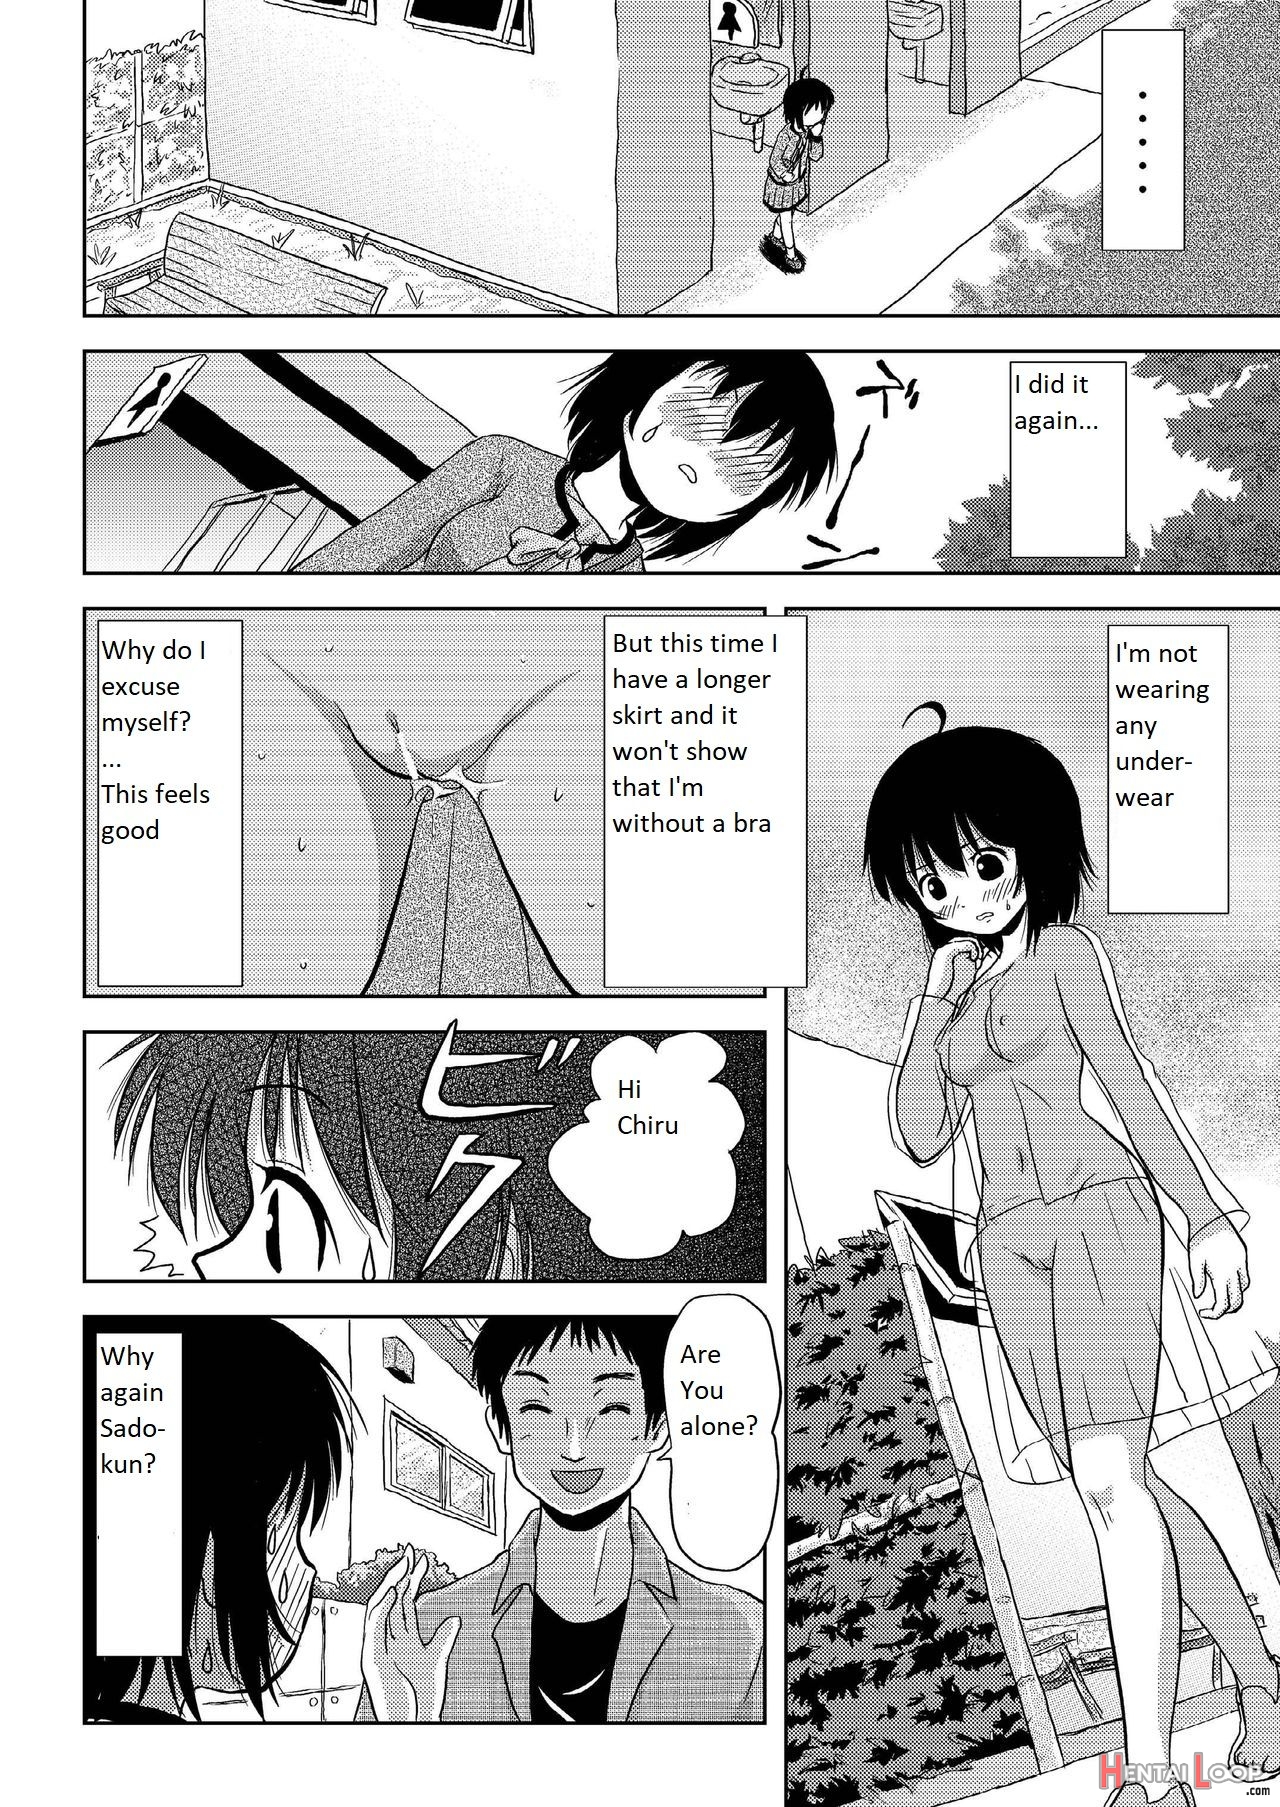 Chiru Exposure 4 Mr T page 10